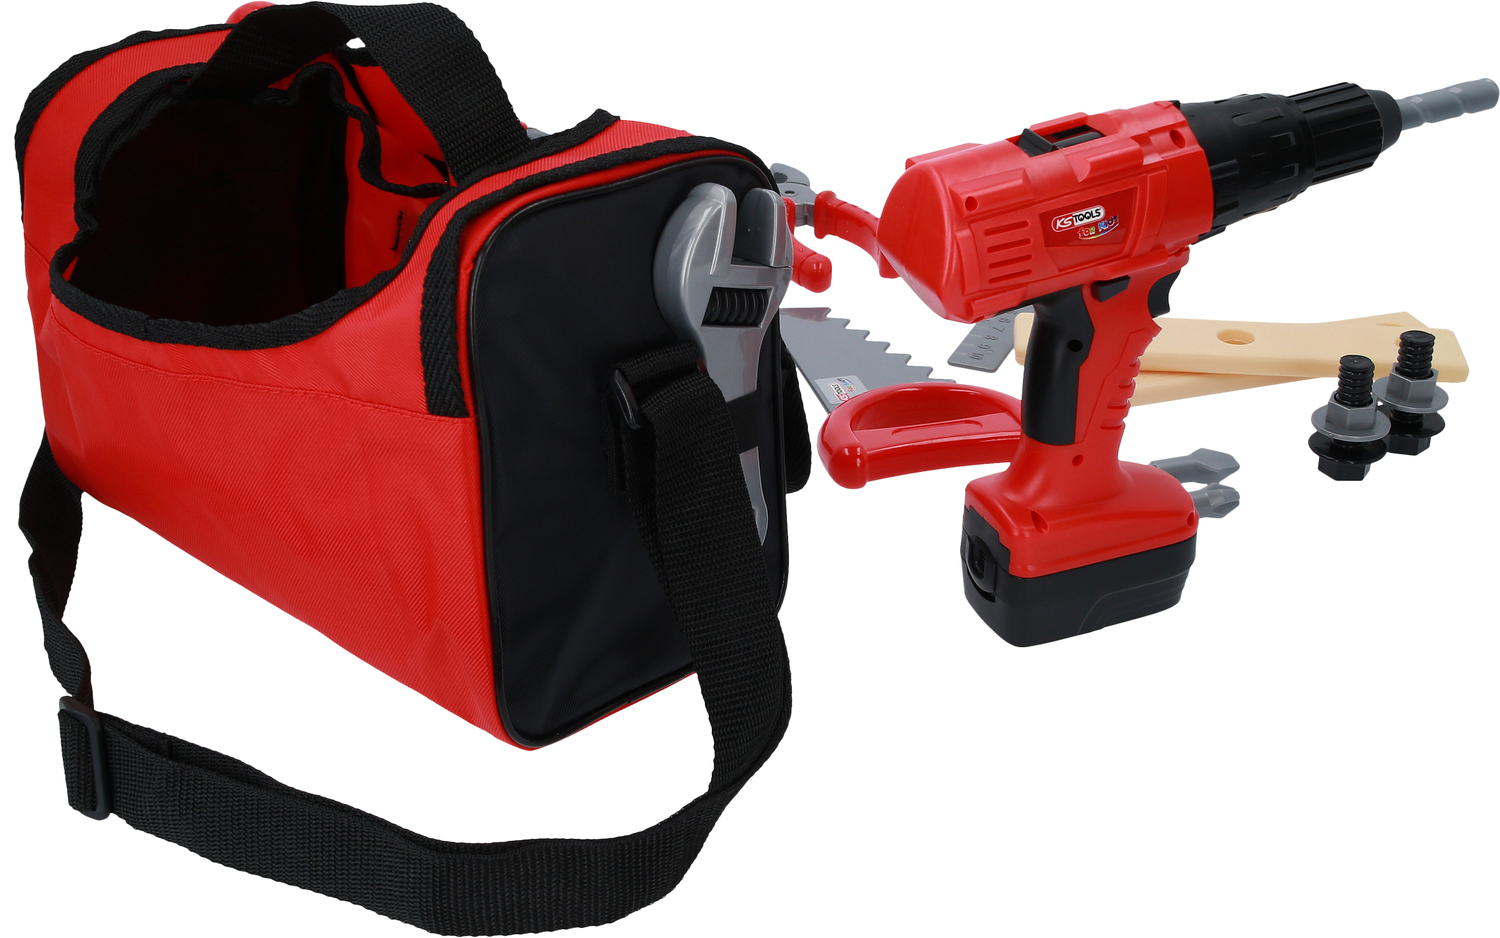 KS-TOOLS Kinder Werkzeug-Satz mit Smartbag-Tasche, 26-tlg